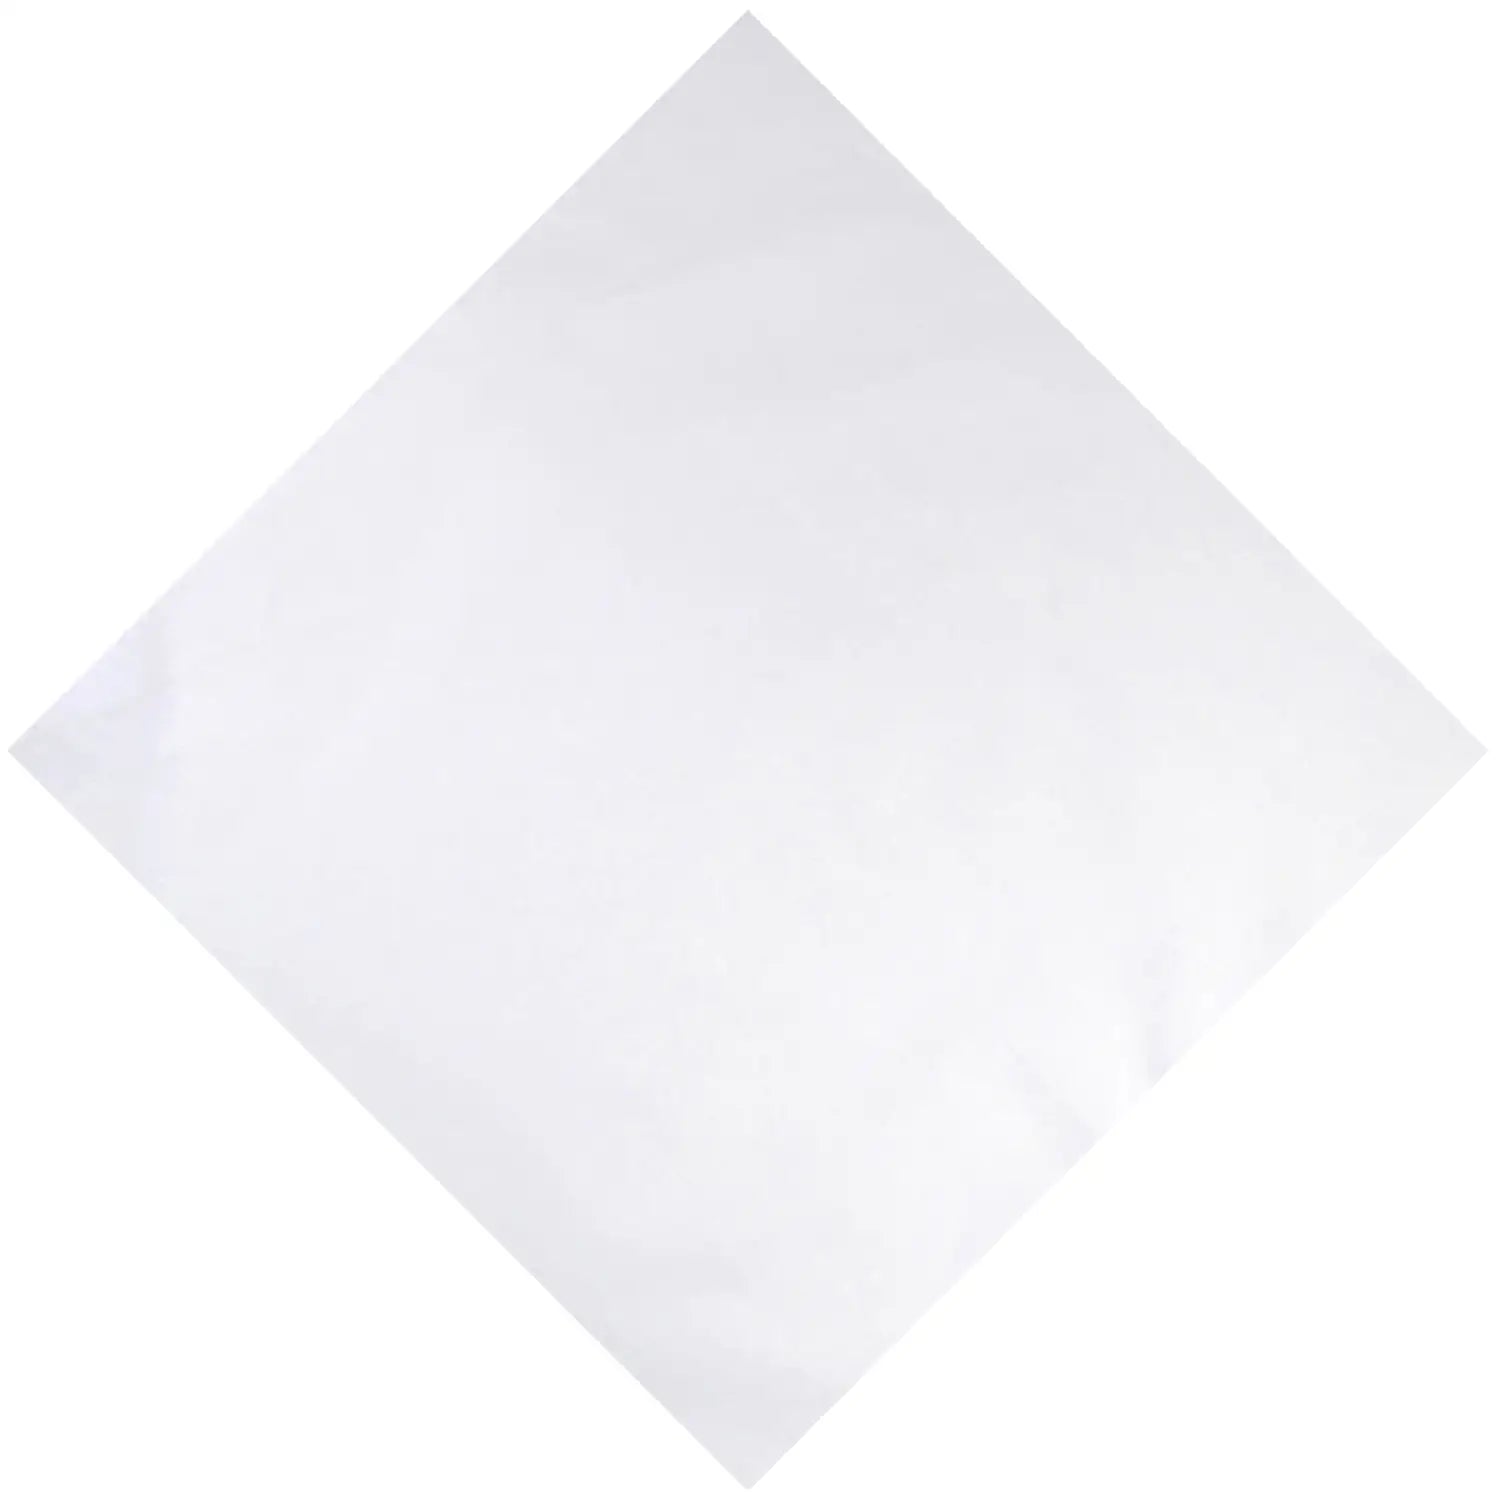 White cotton square bandana on white background